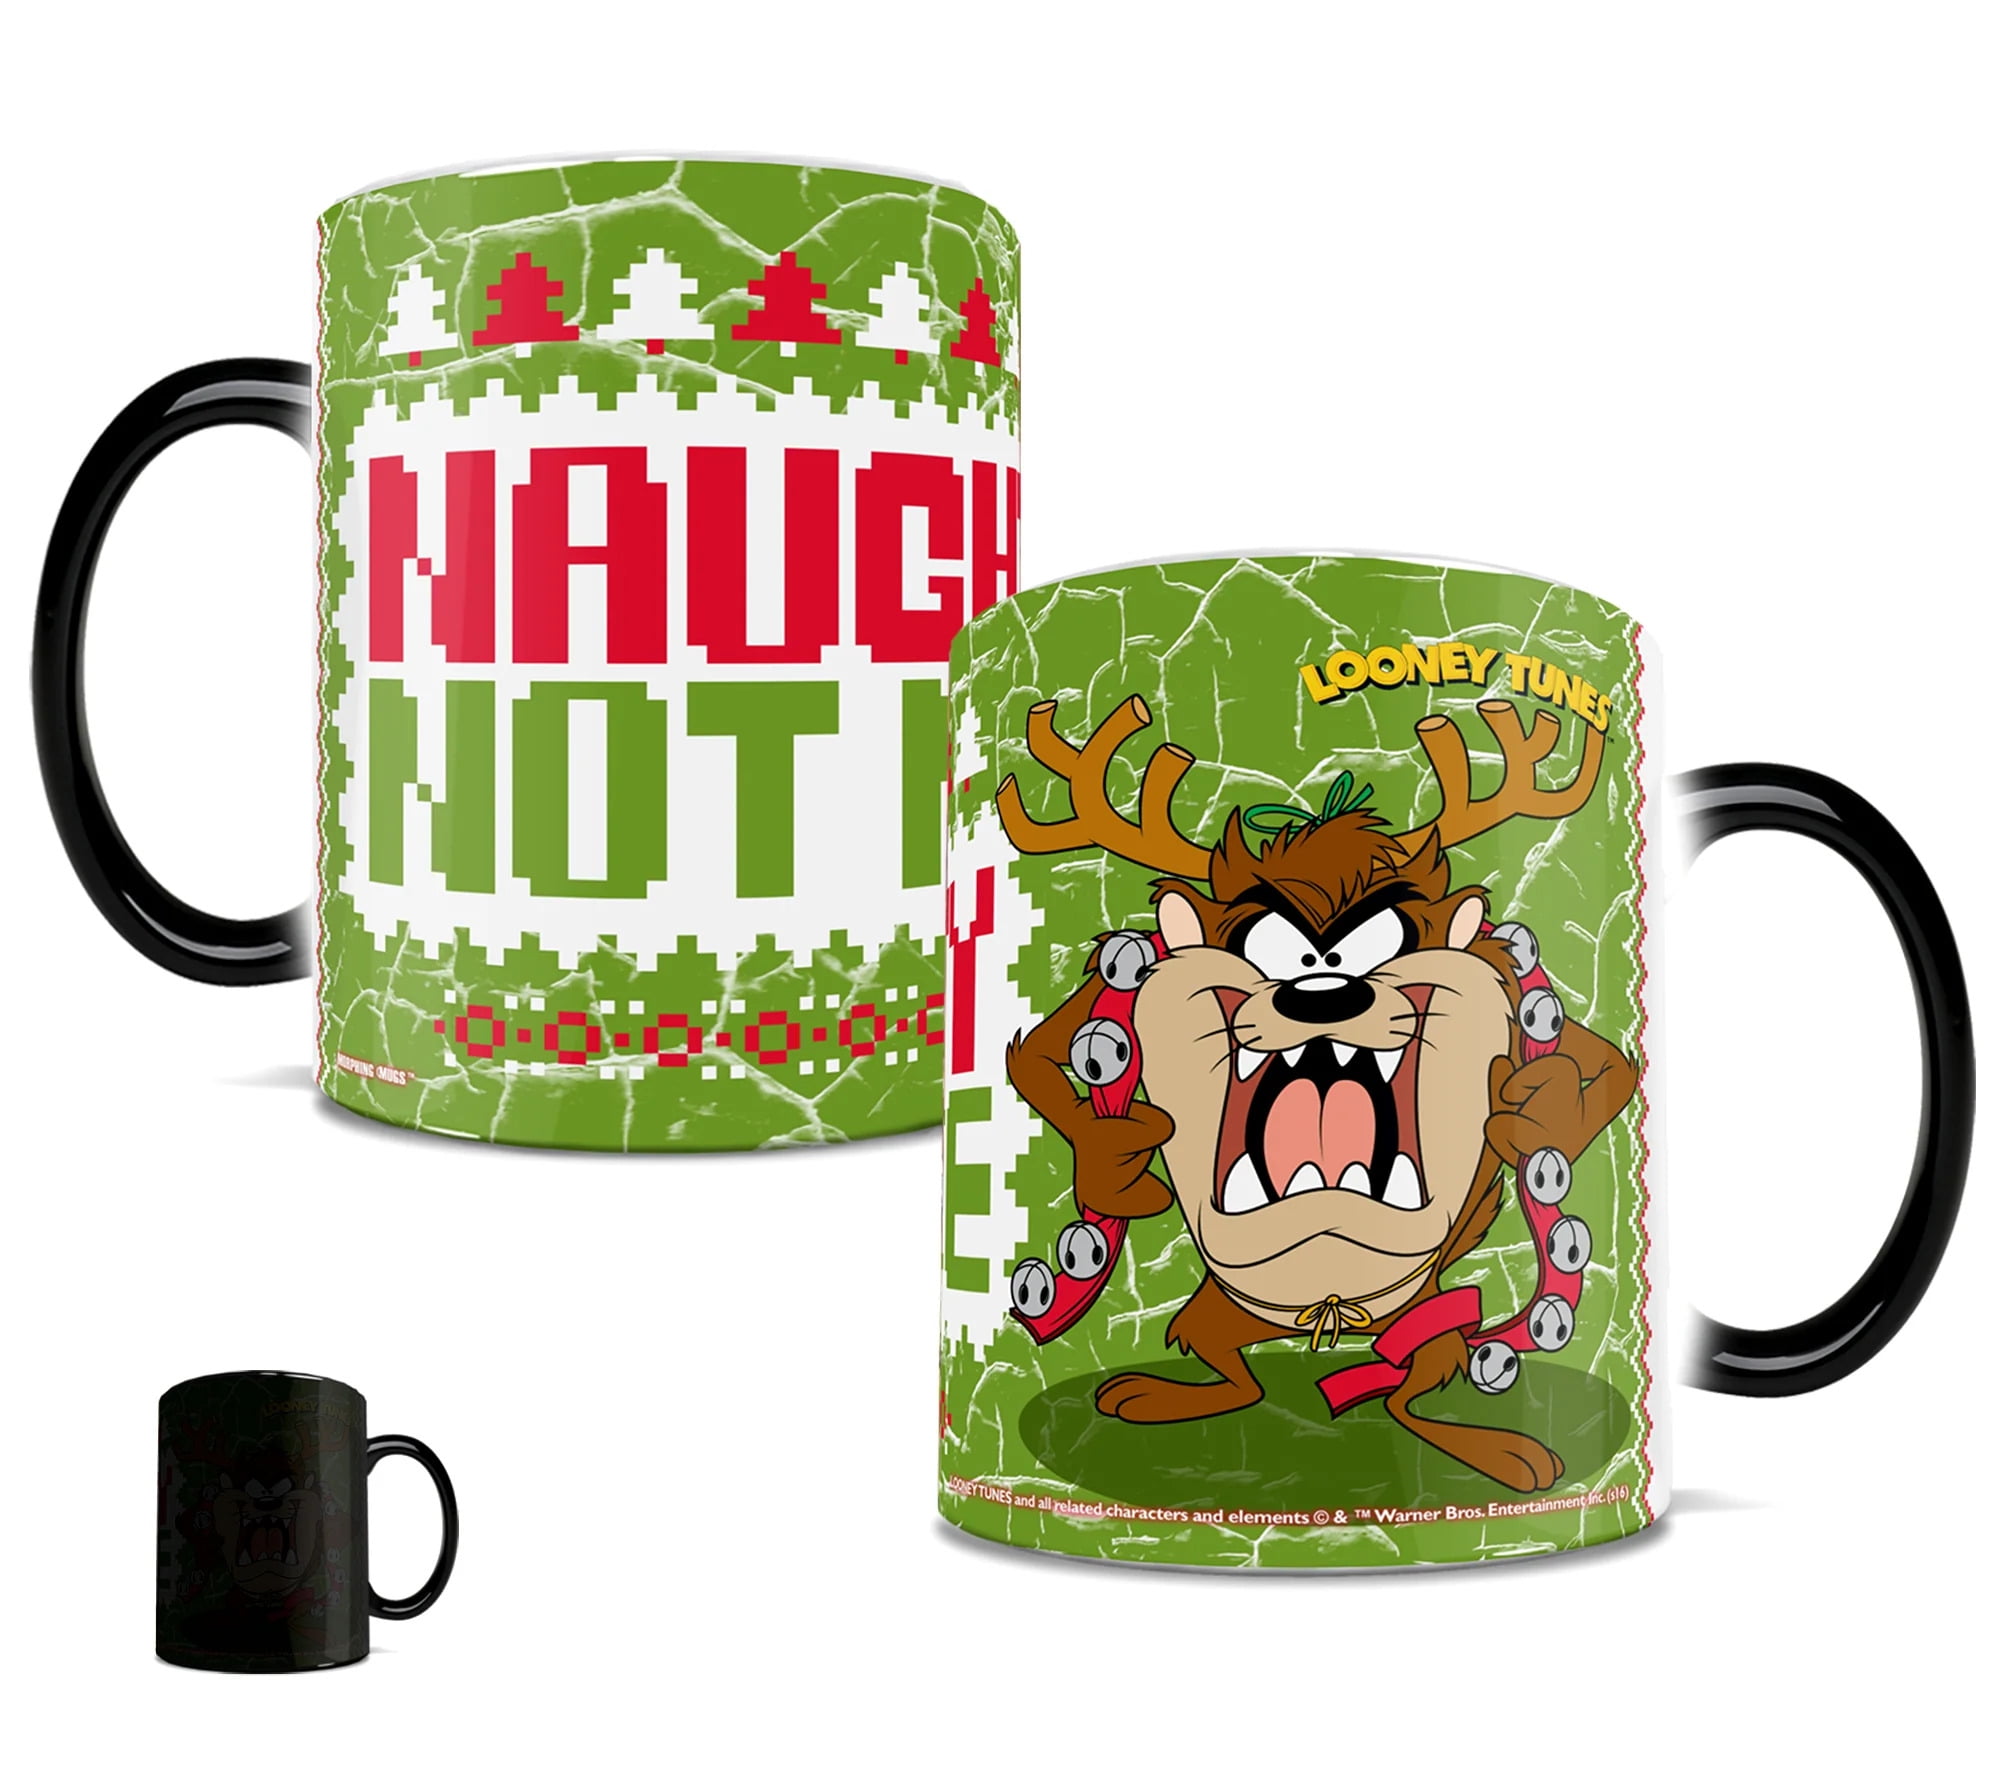 Elf (World's Best Cup of Coffee) Morphing Mugs Heat-Sensitive Mug